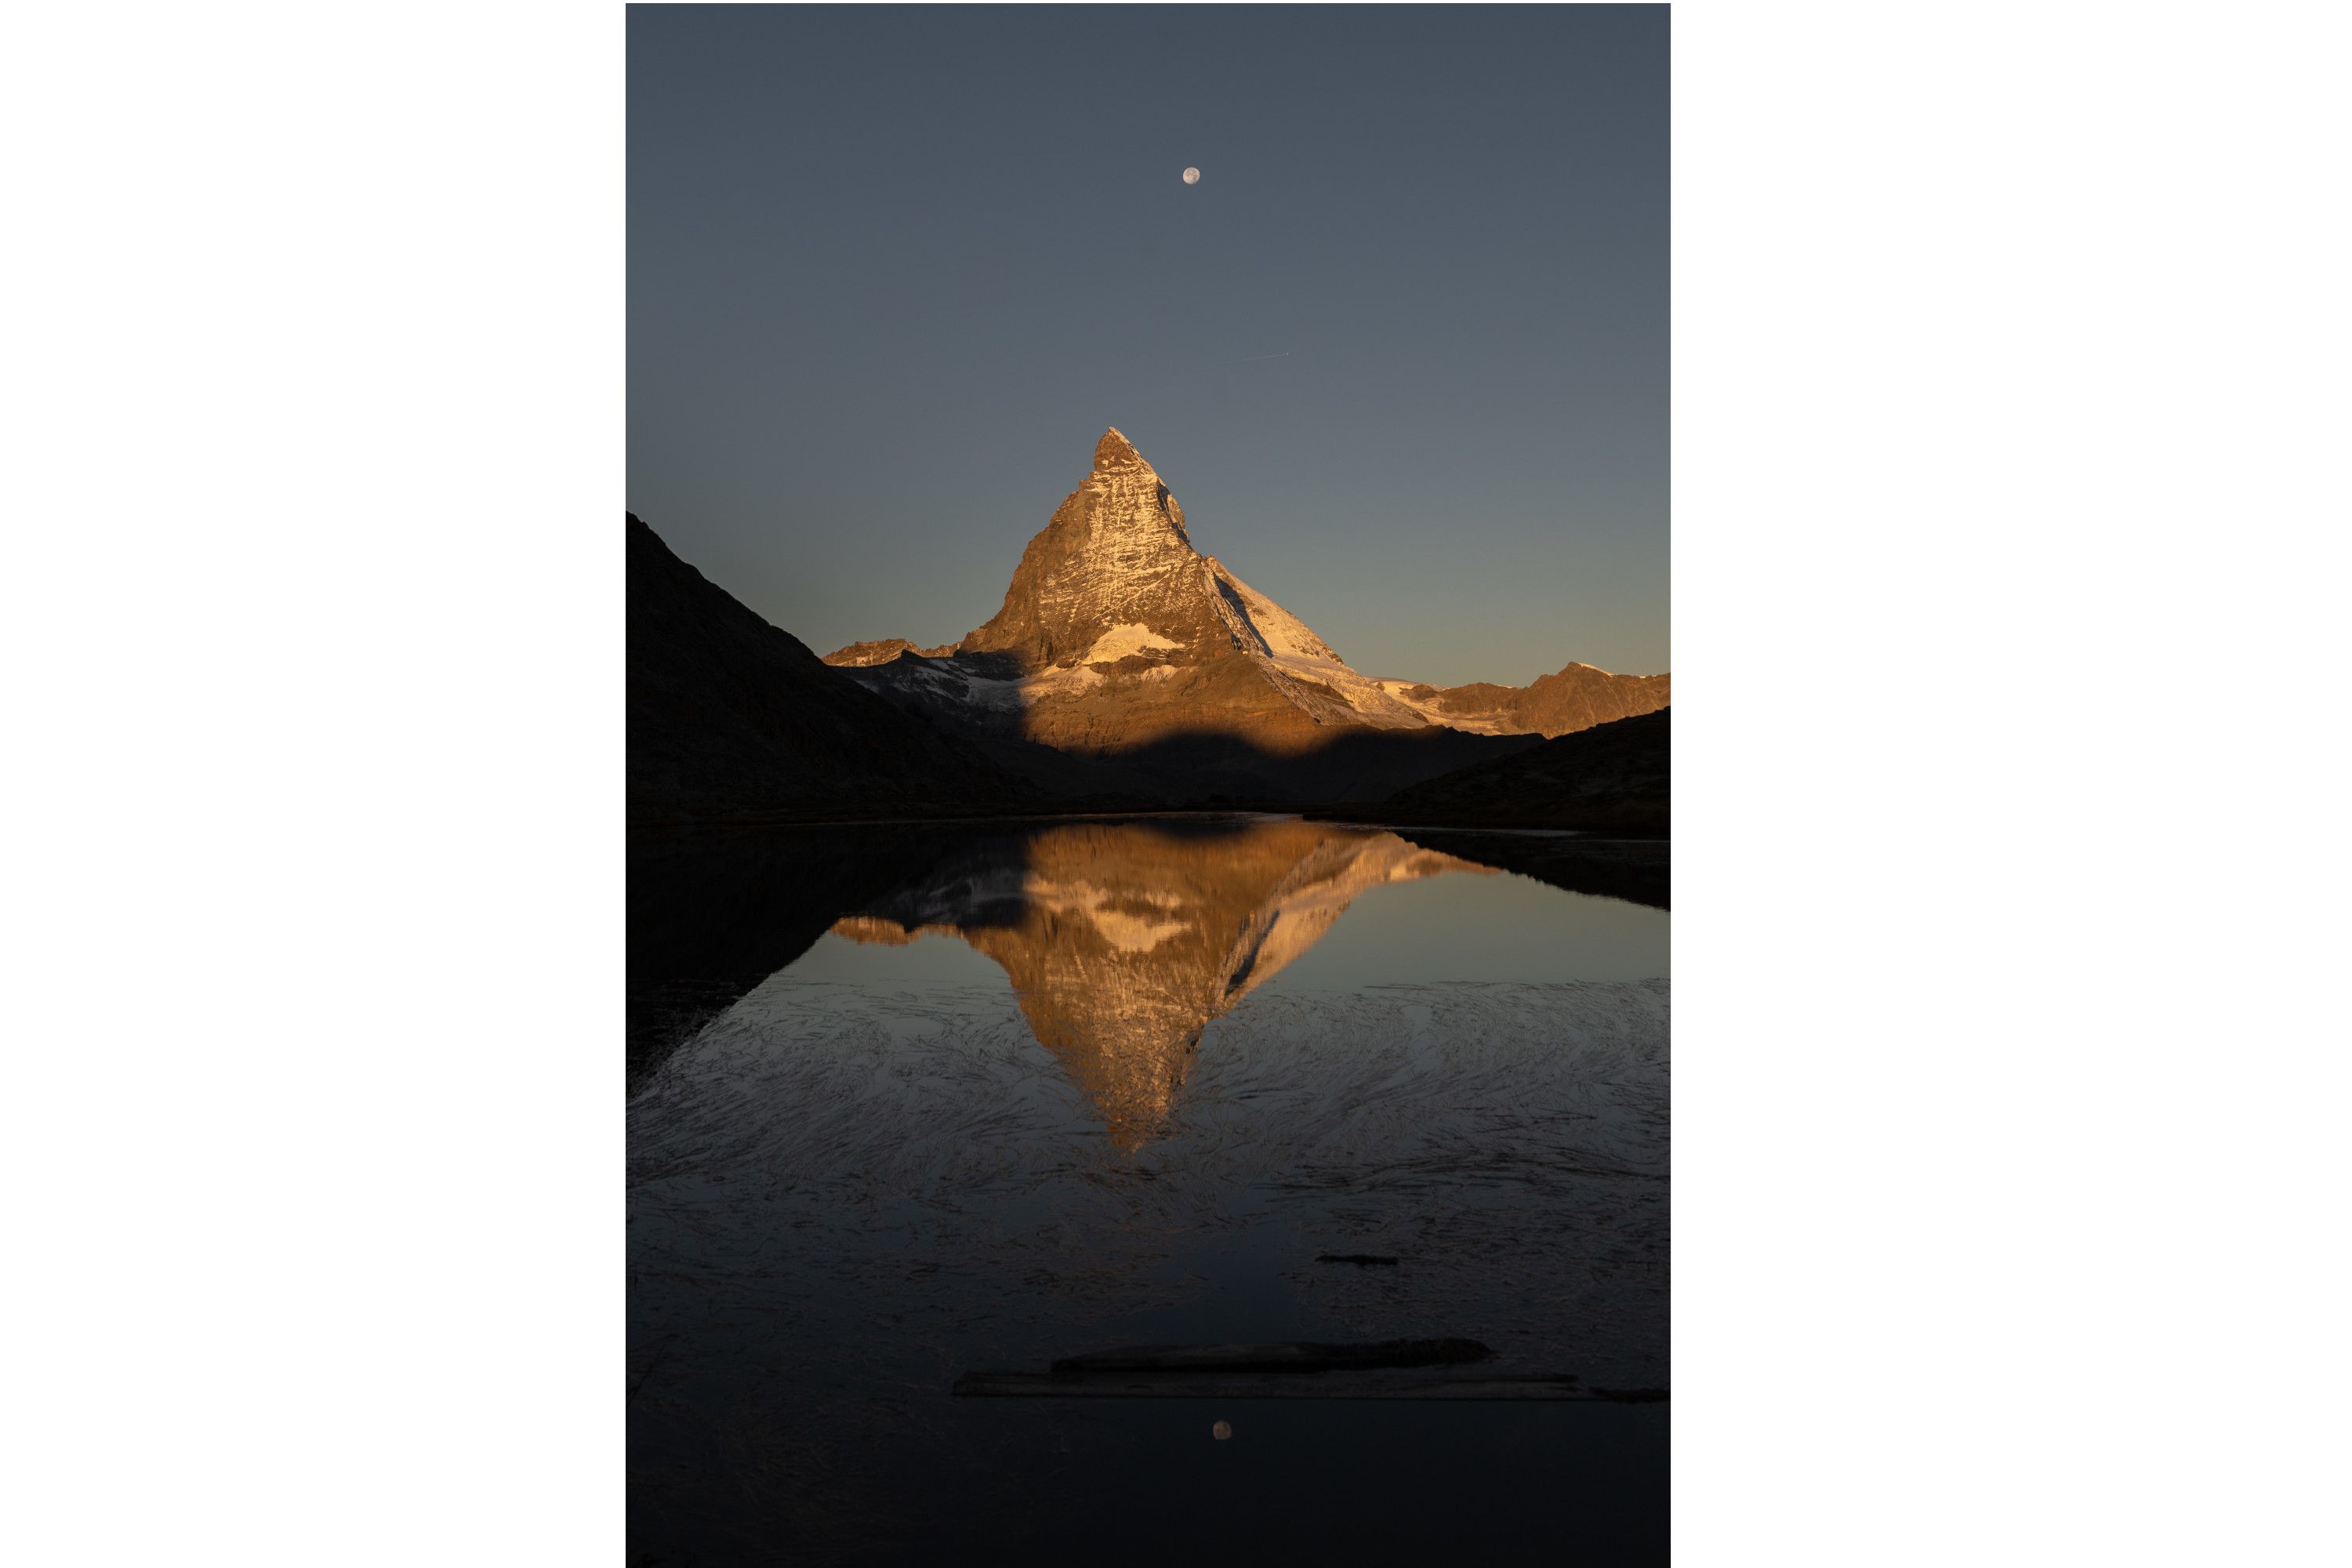 Matterhorn mountain and reflection in a lake